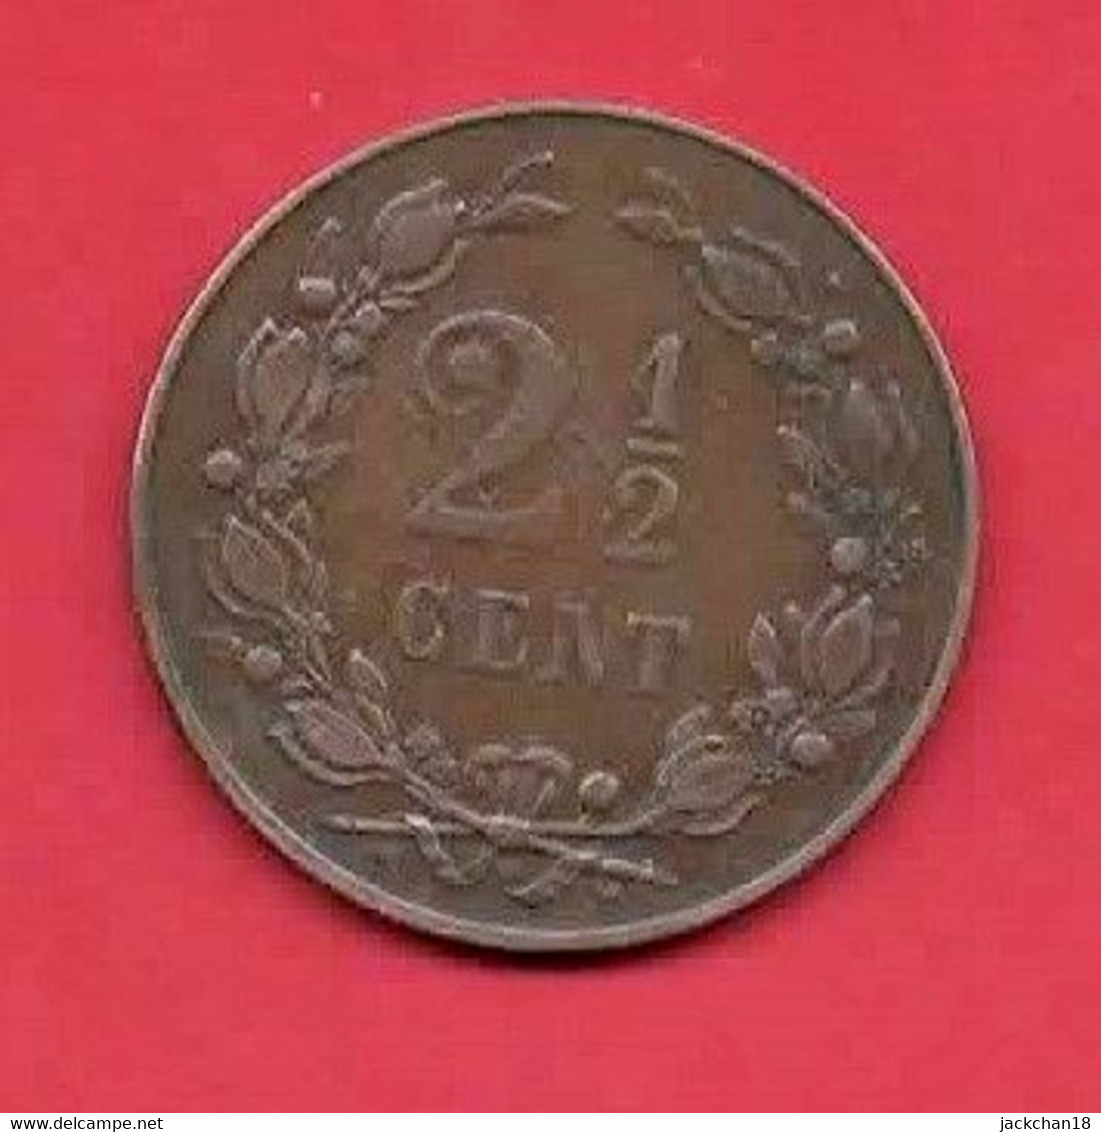 -- MONNAIE PAYS-BAS / KONINGRIJK DER NEDERLANDEN / 2 1/2 CENT / 1898 -- - 2.5 Cent